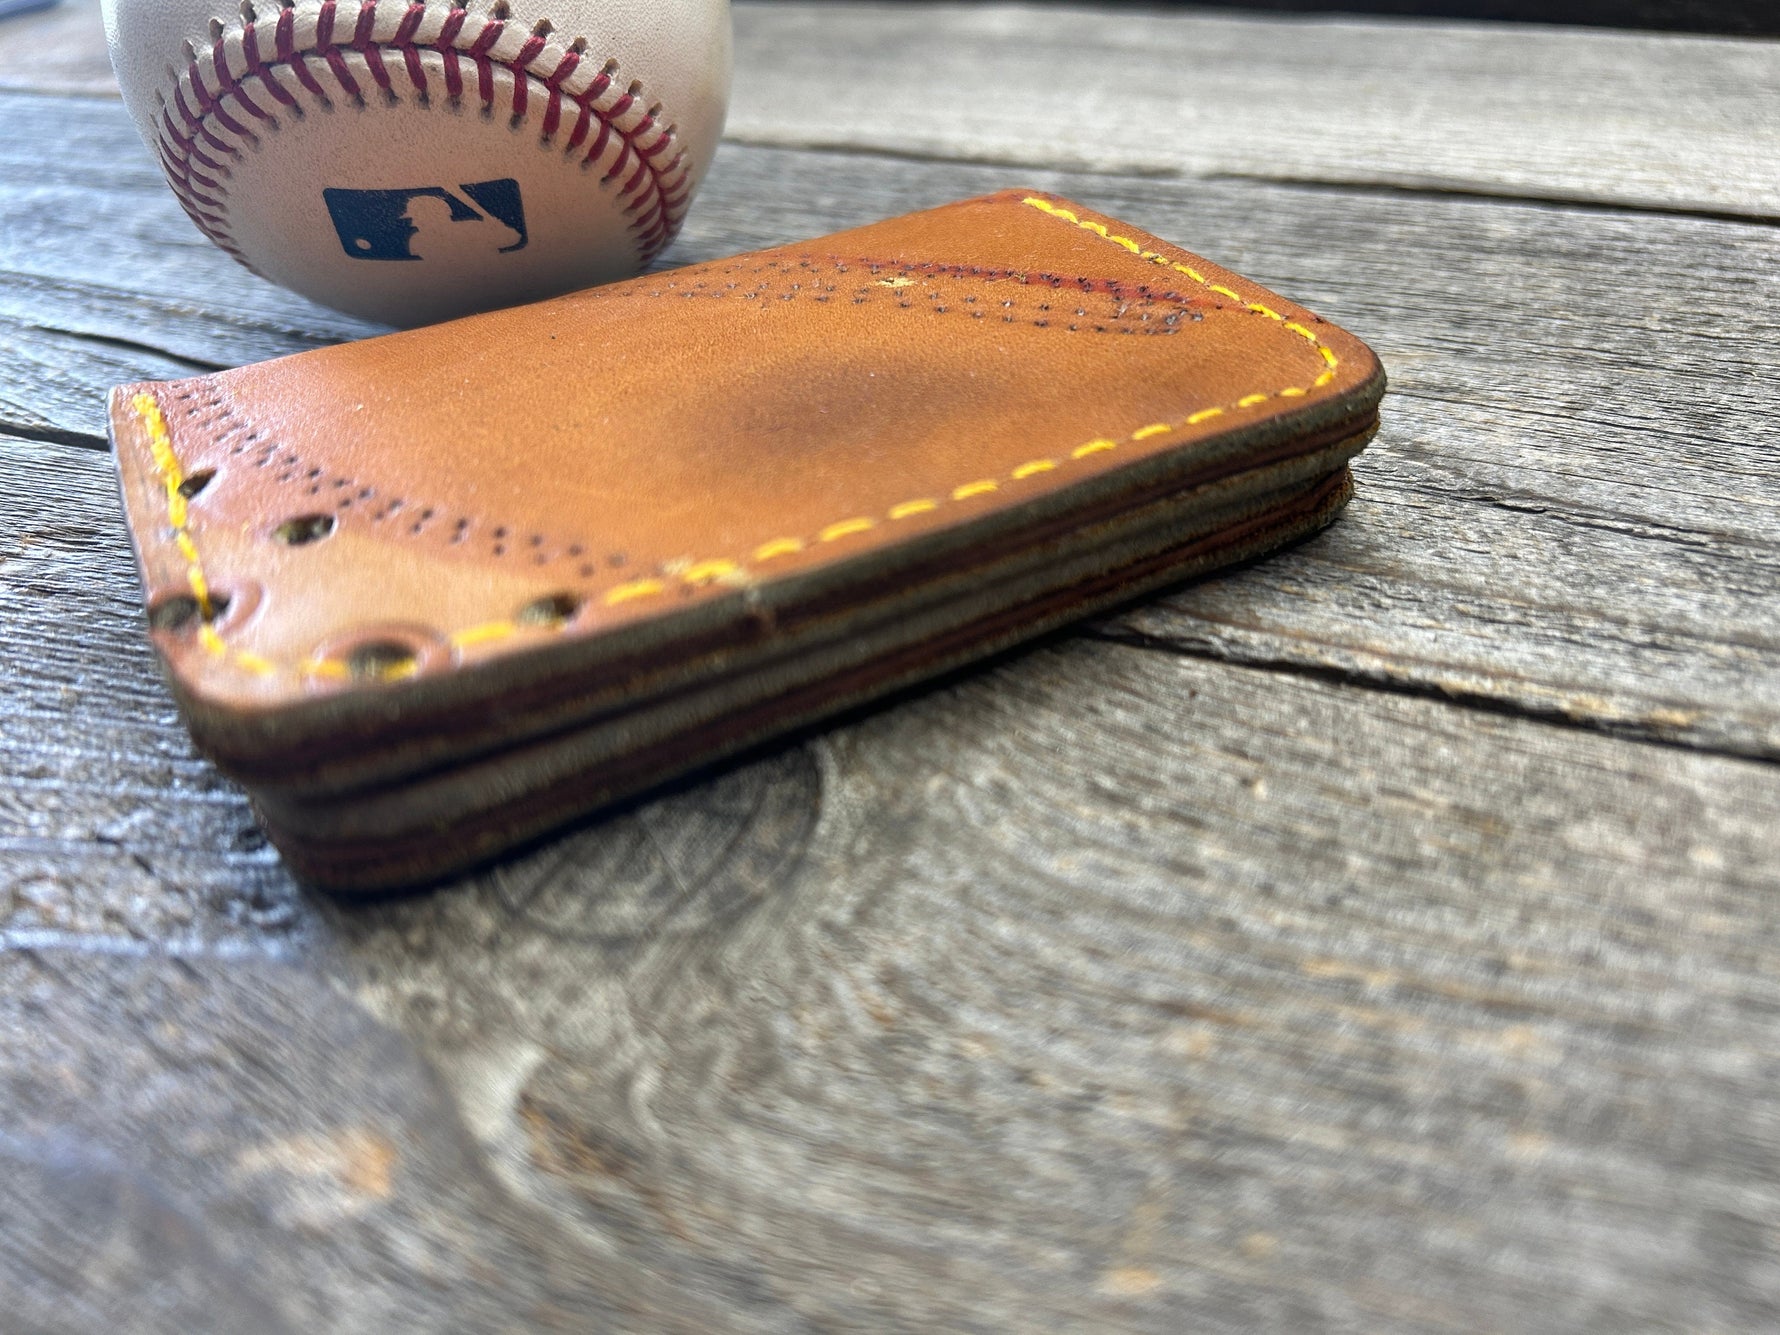 Vintage Rawlings Baseball Glove Wallet!